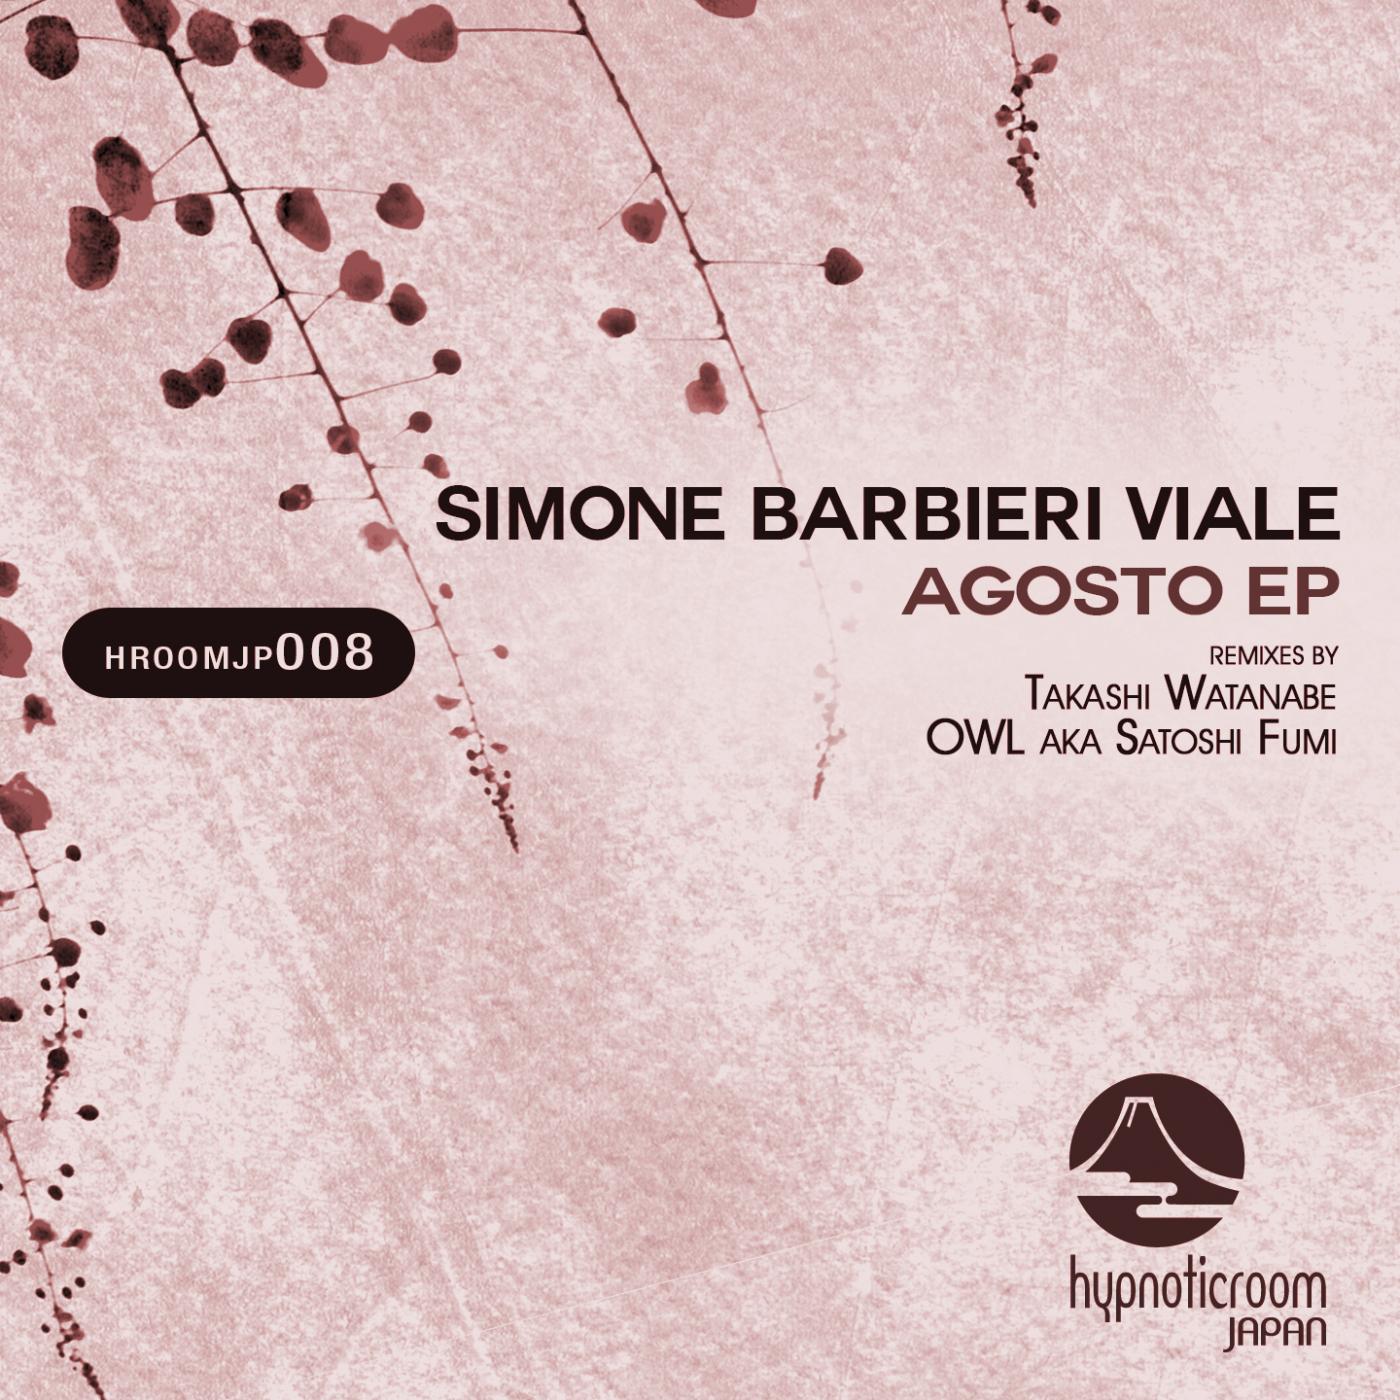 Simone Barbieri Viale - A New Old